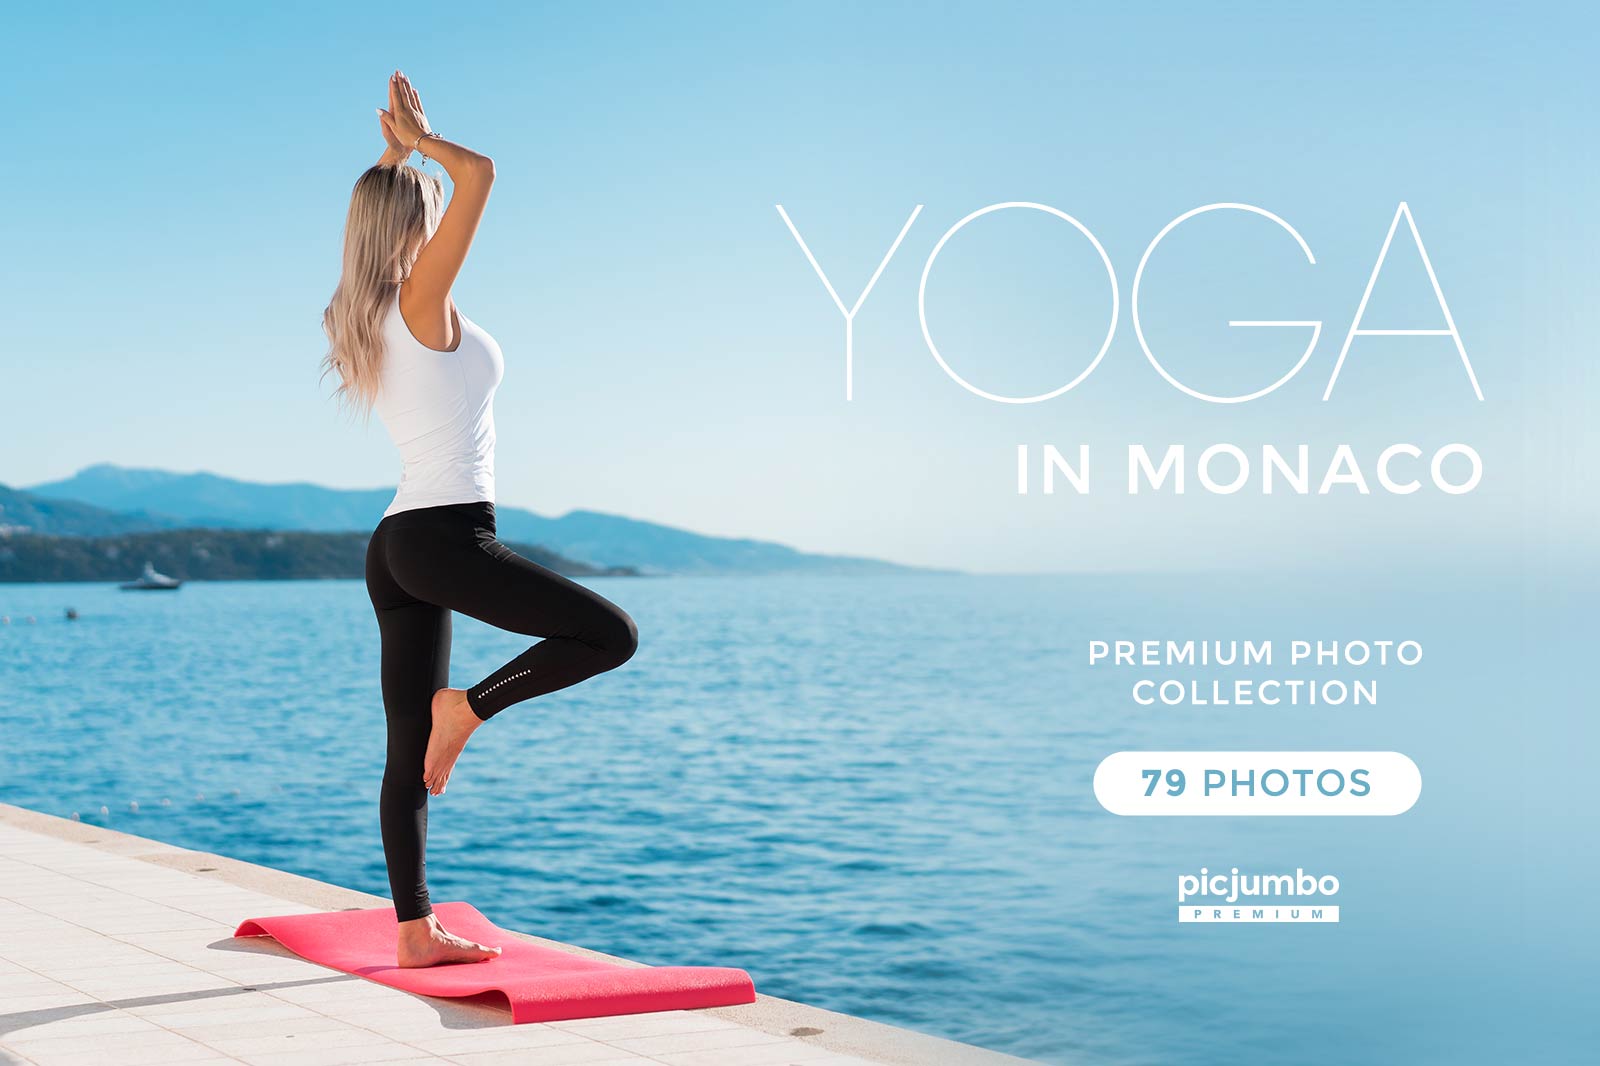 Yoga in Monaco Stock Photo Collection